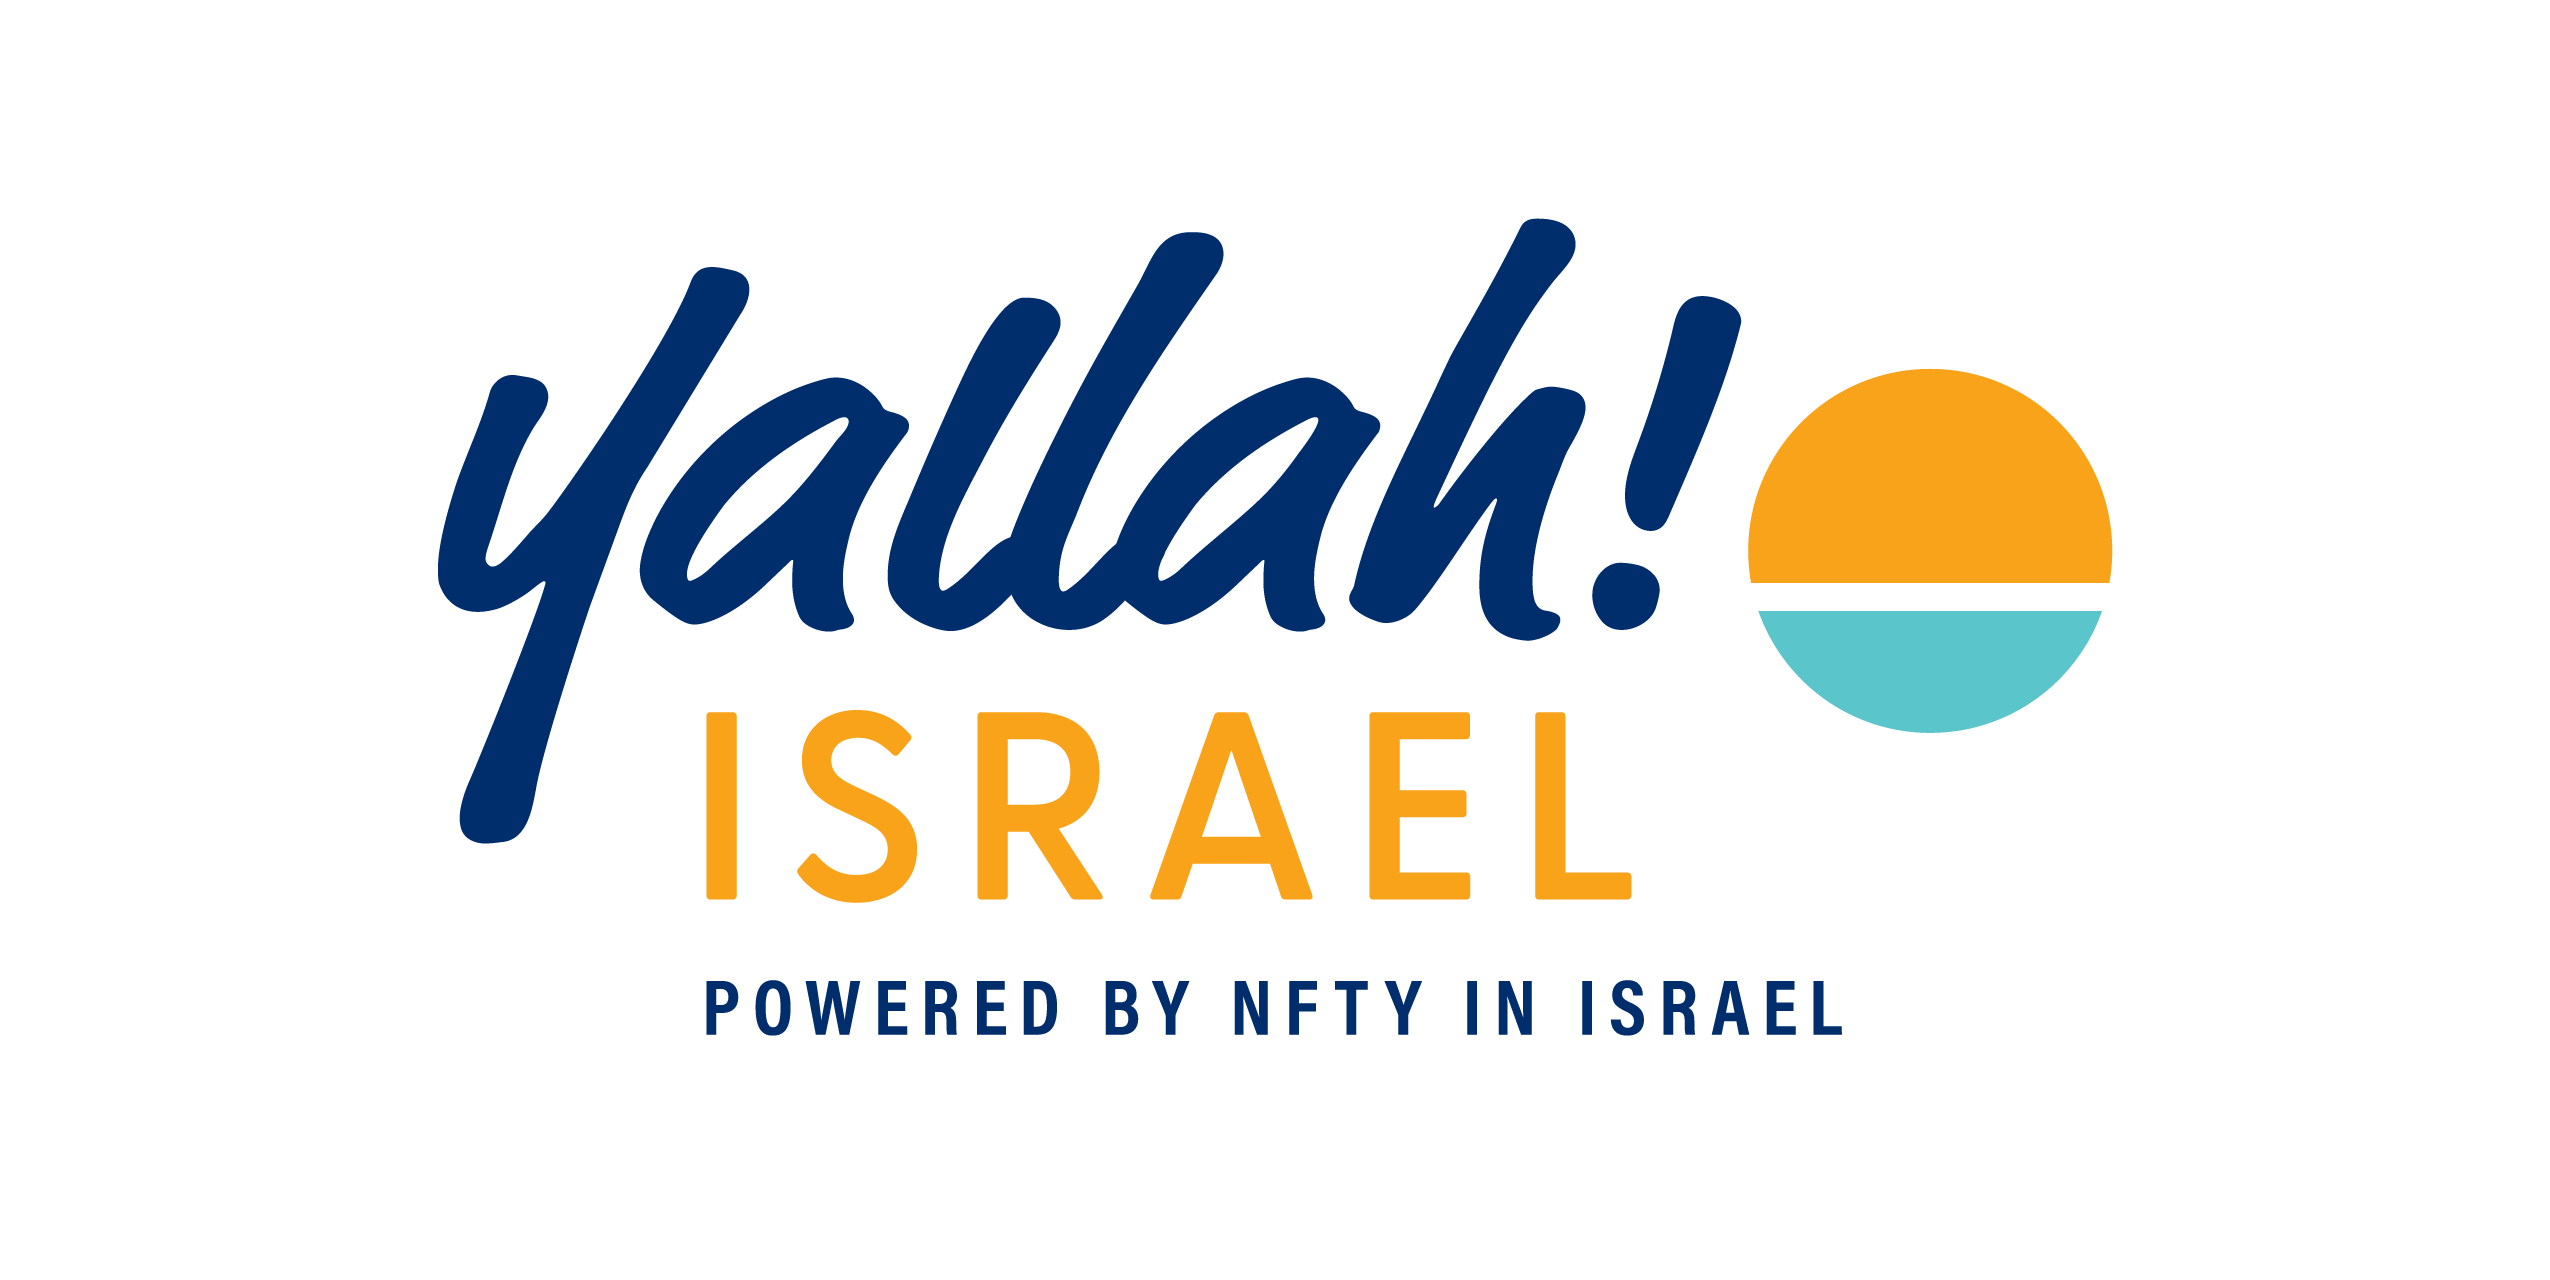 Yallah! Israel